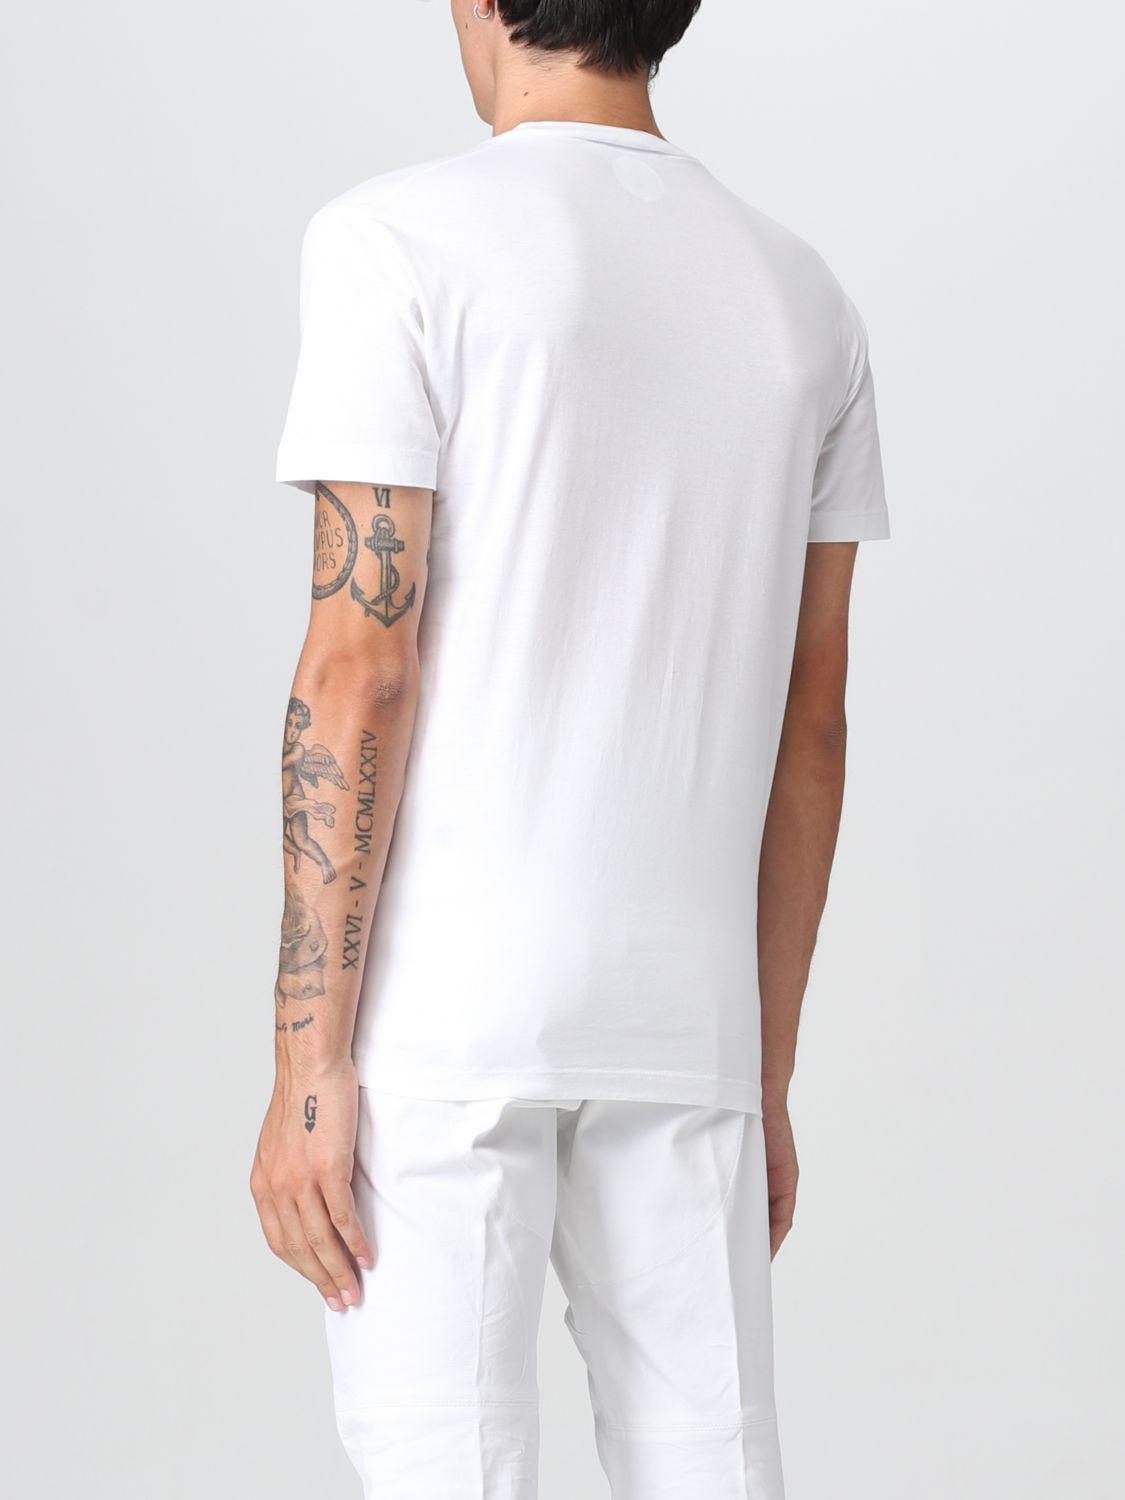 Stüssy Men's T-Shirt - White - L